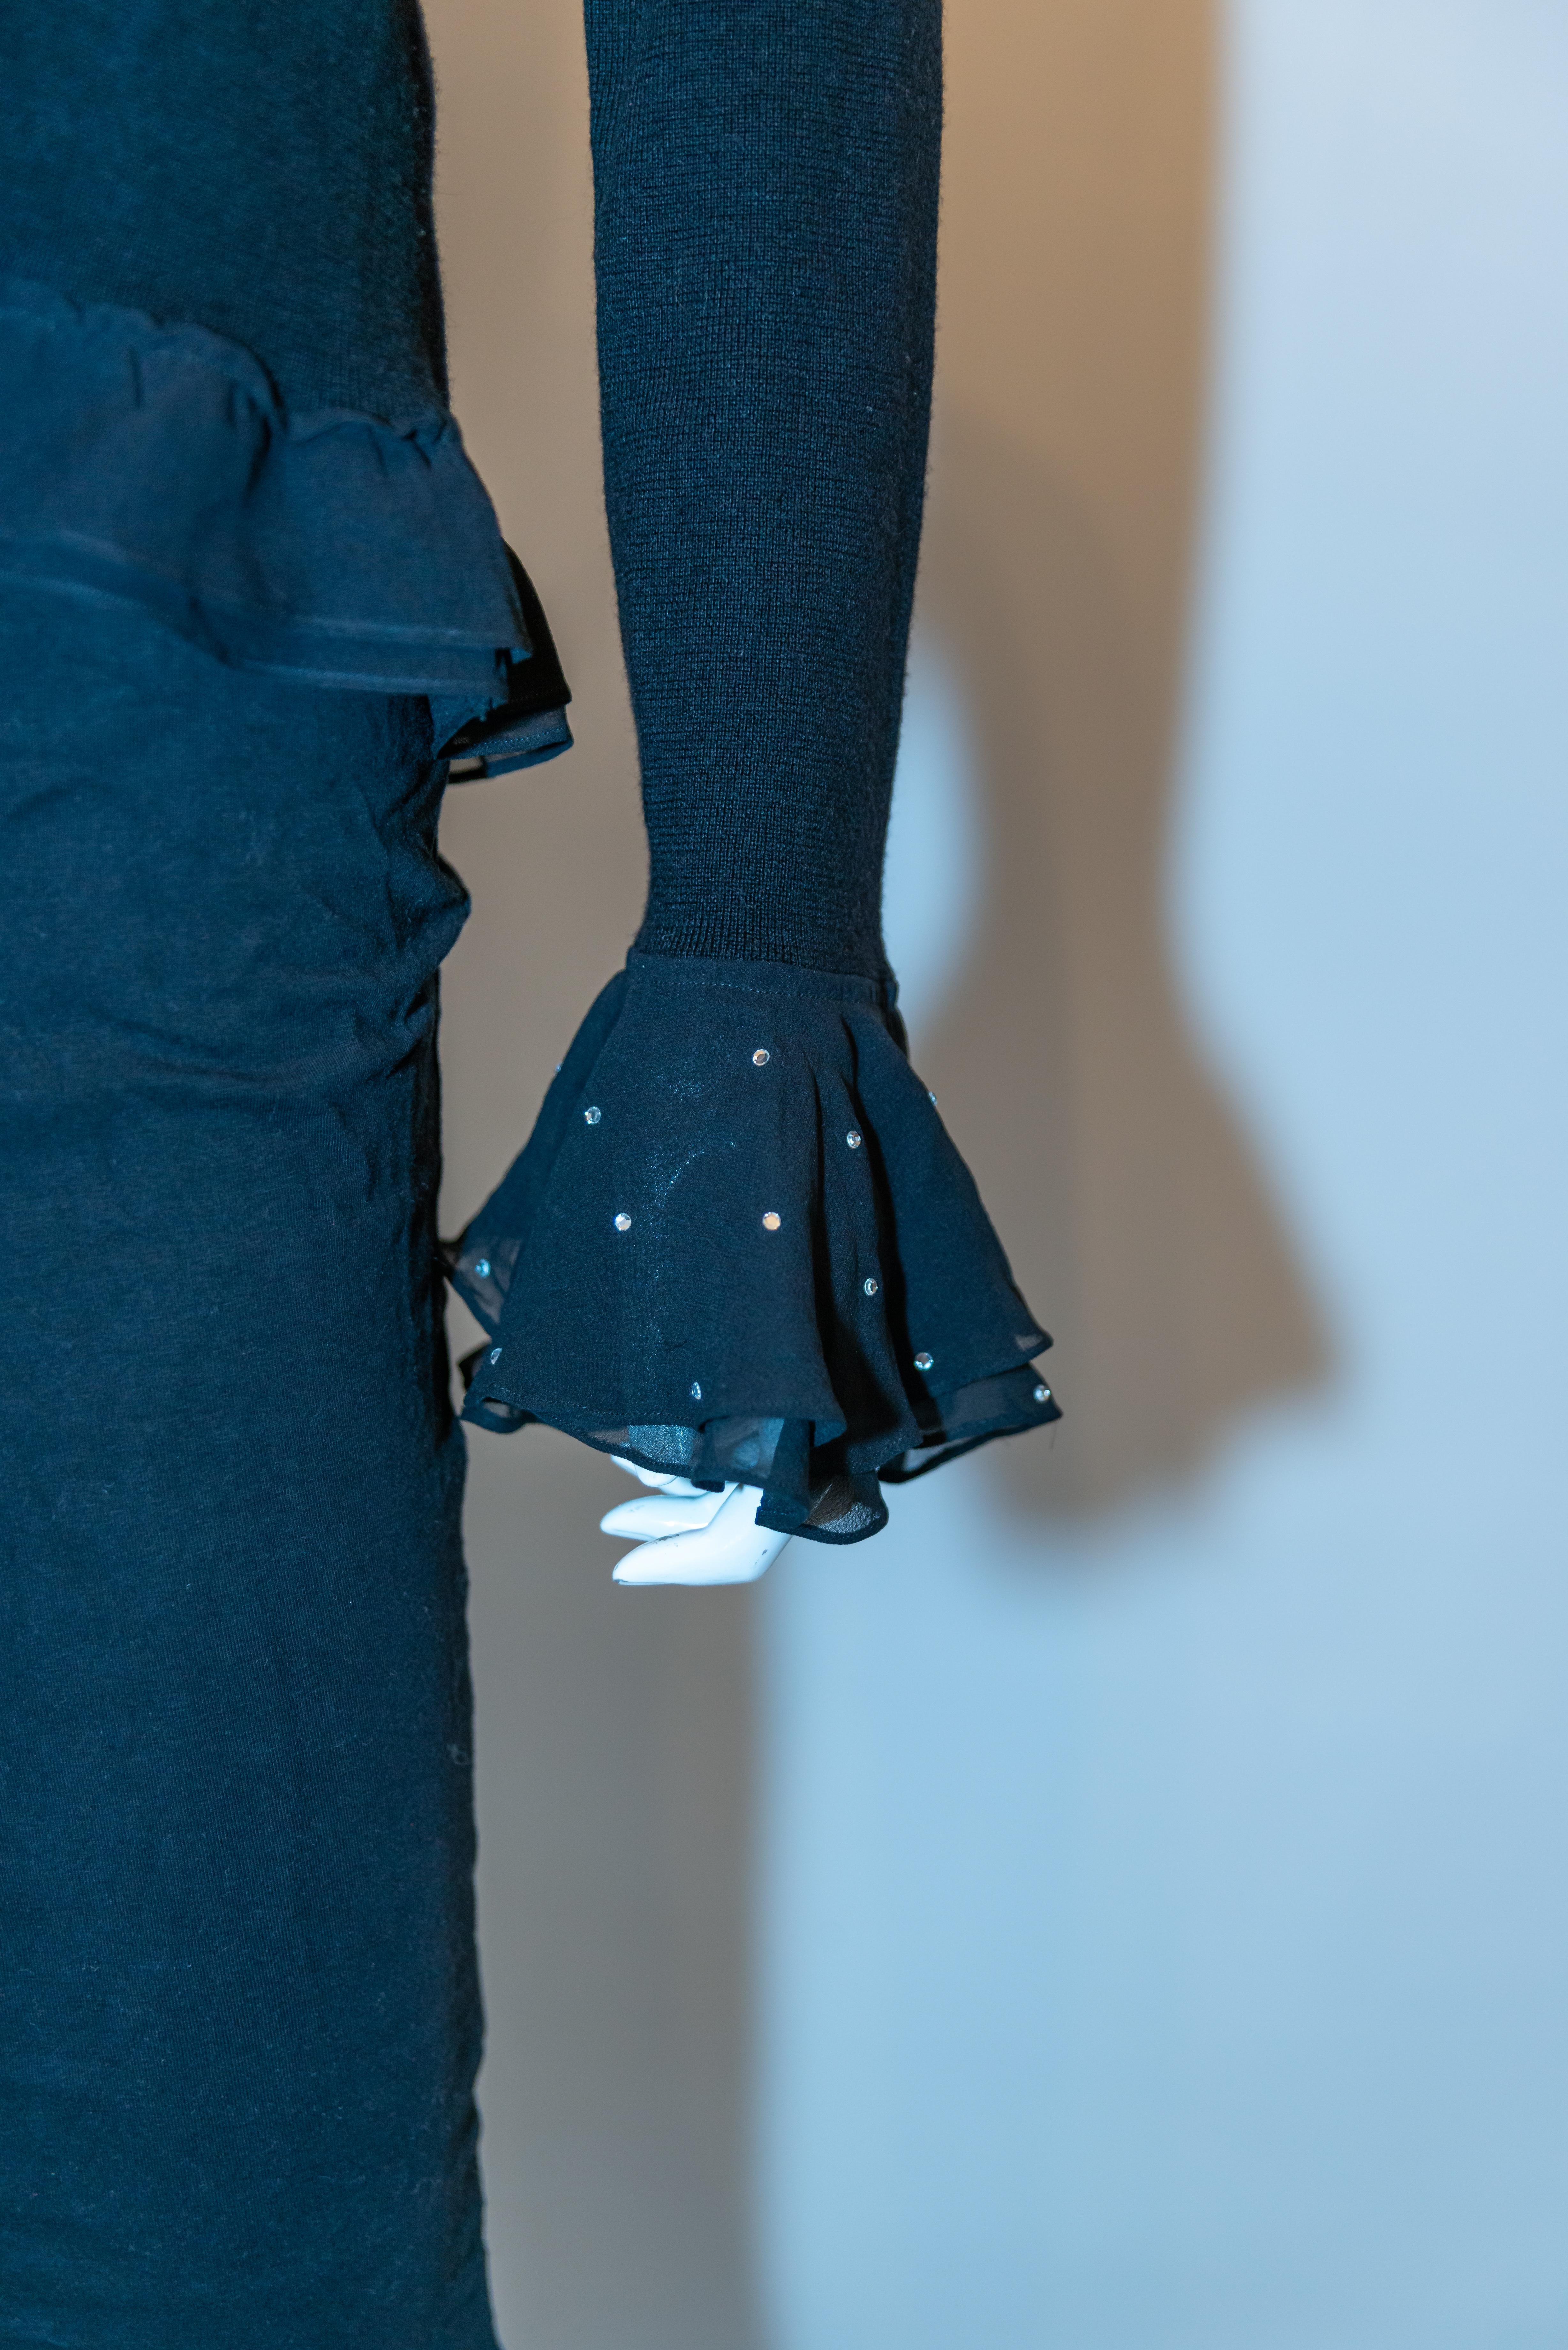 Women's Lane Crawford Black Wool Cardigan with Diamante Buttons & Chiffon Cuffs and Hem